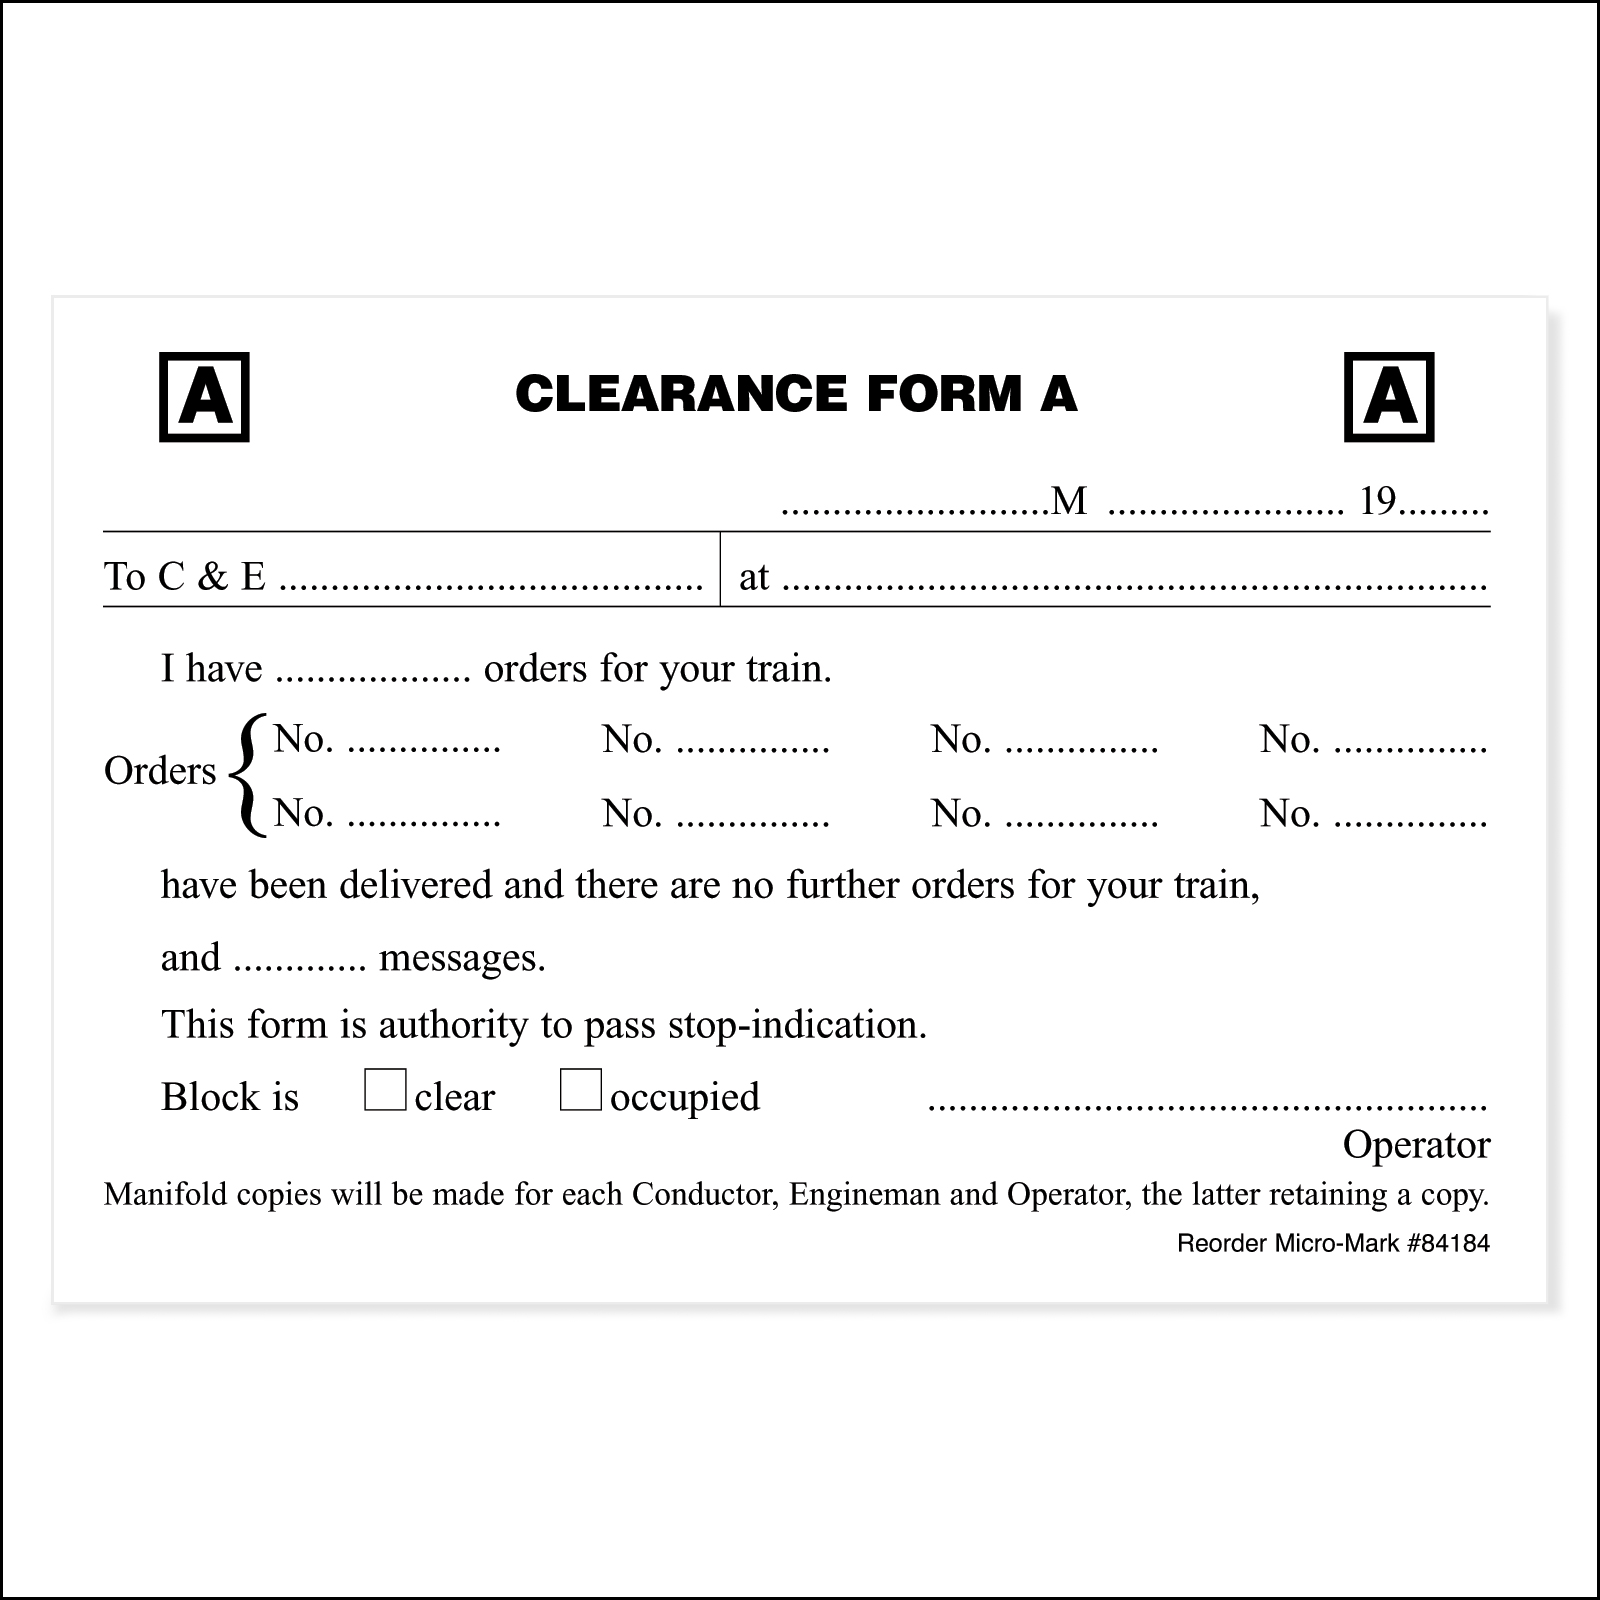 Clearance Form A